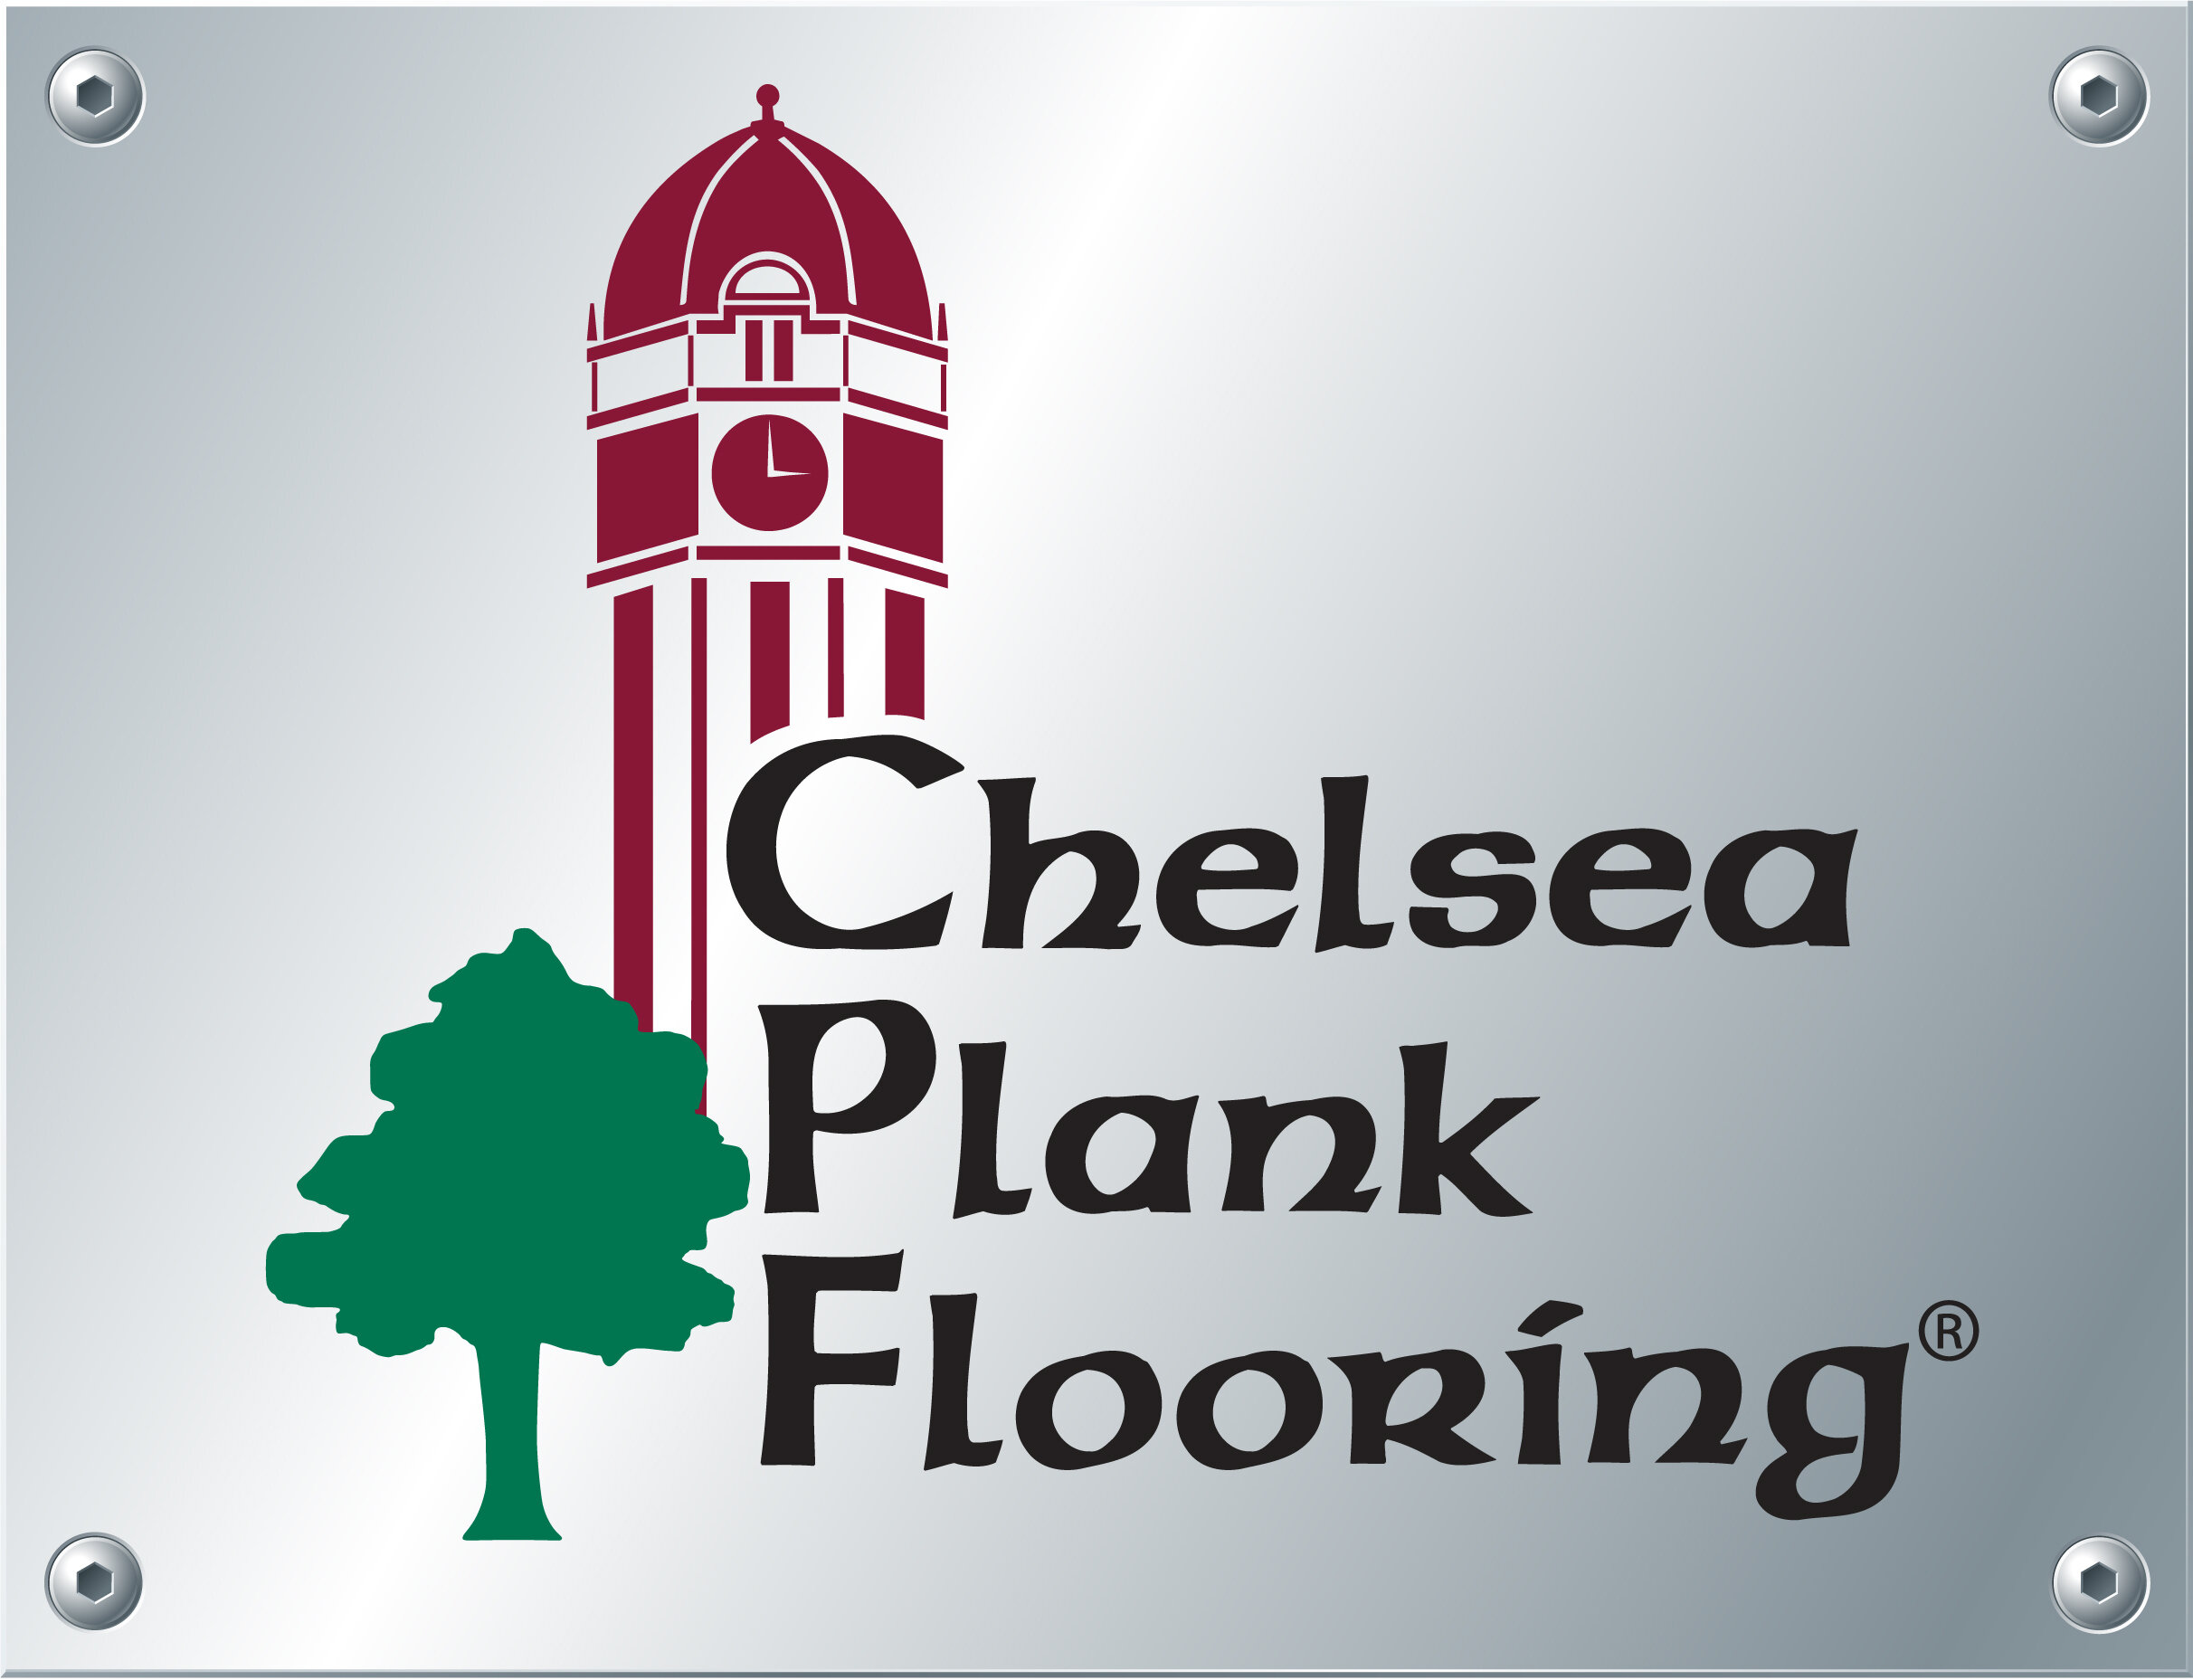 Contact Chelsea Plank Flooring